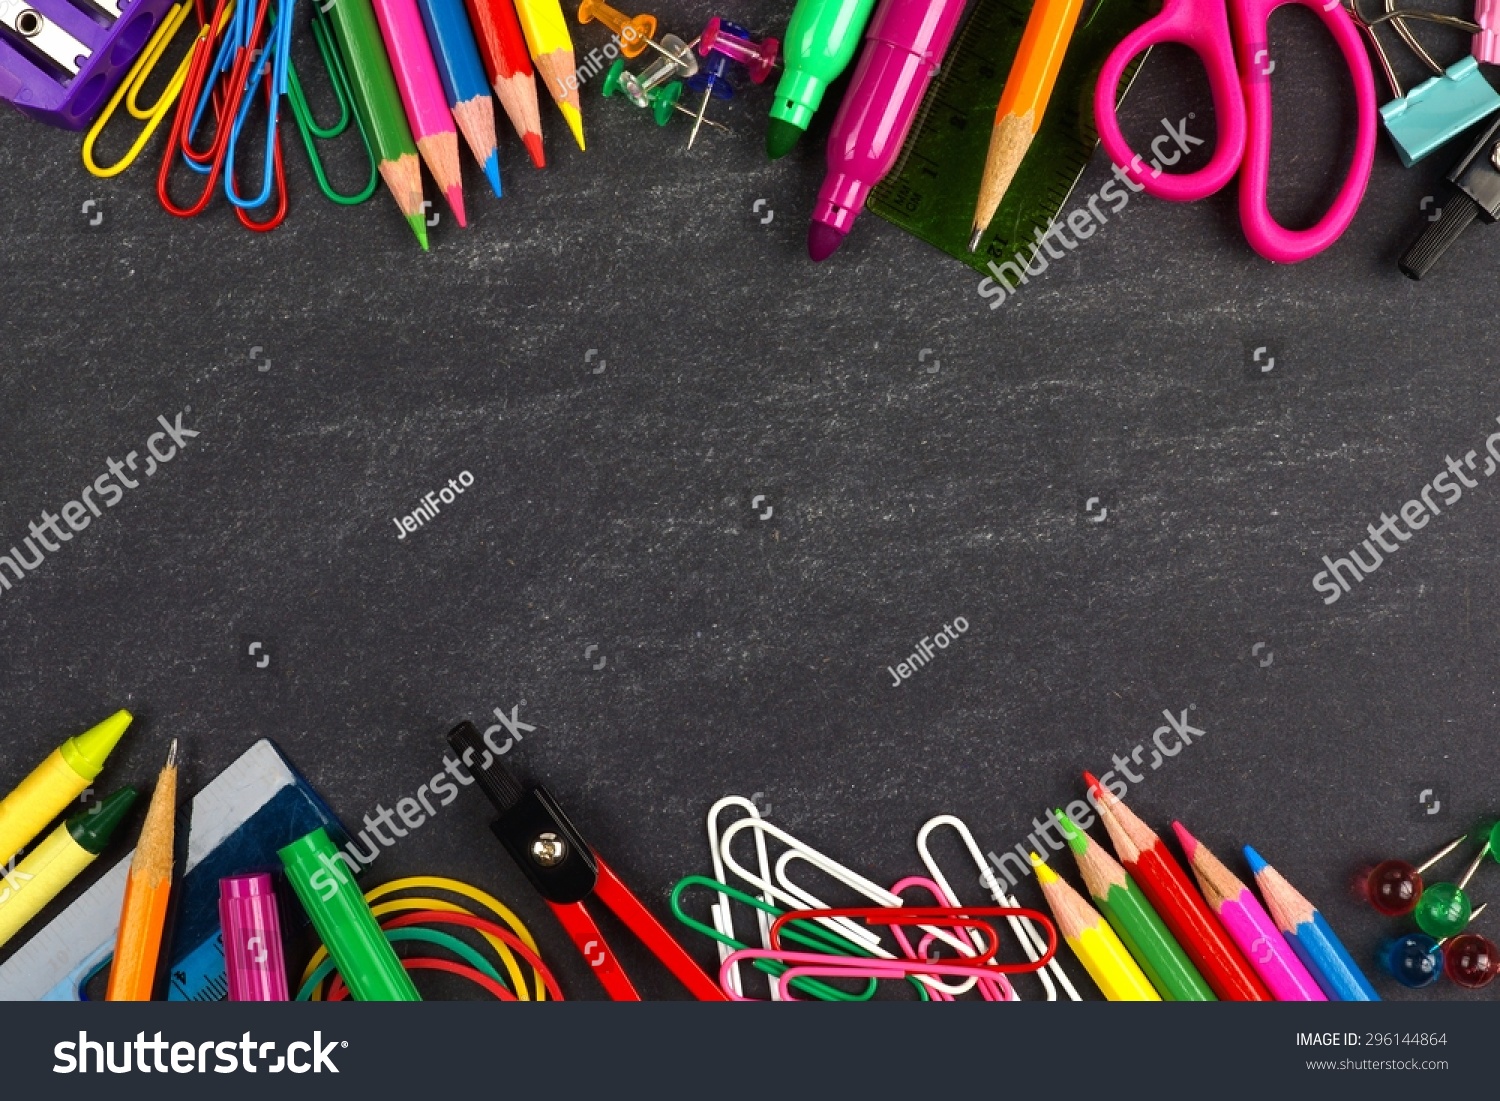 School supplies double border on a chalkboard background #296144864